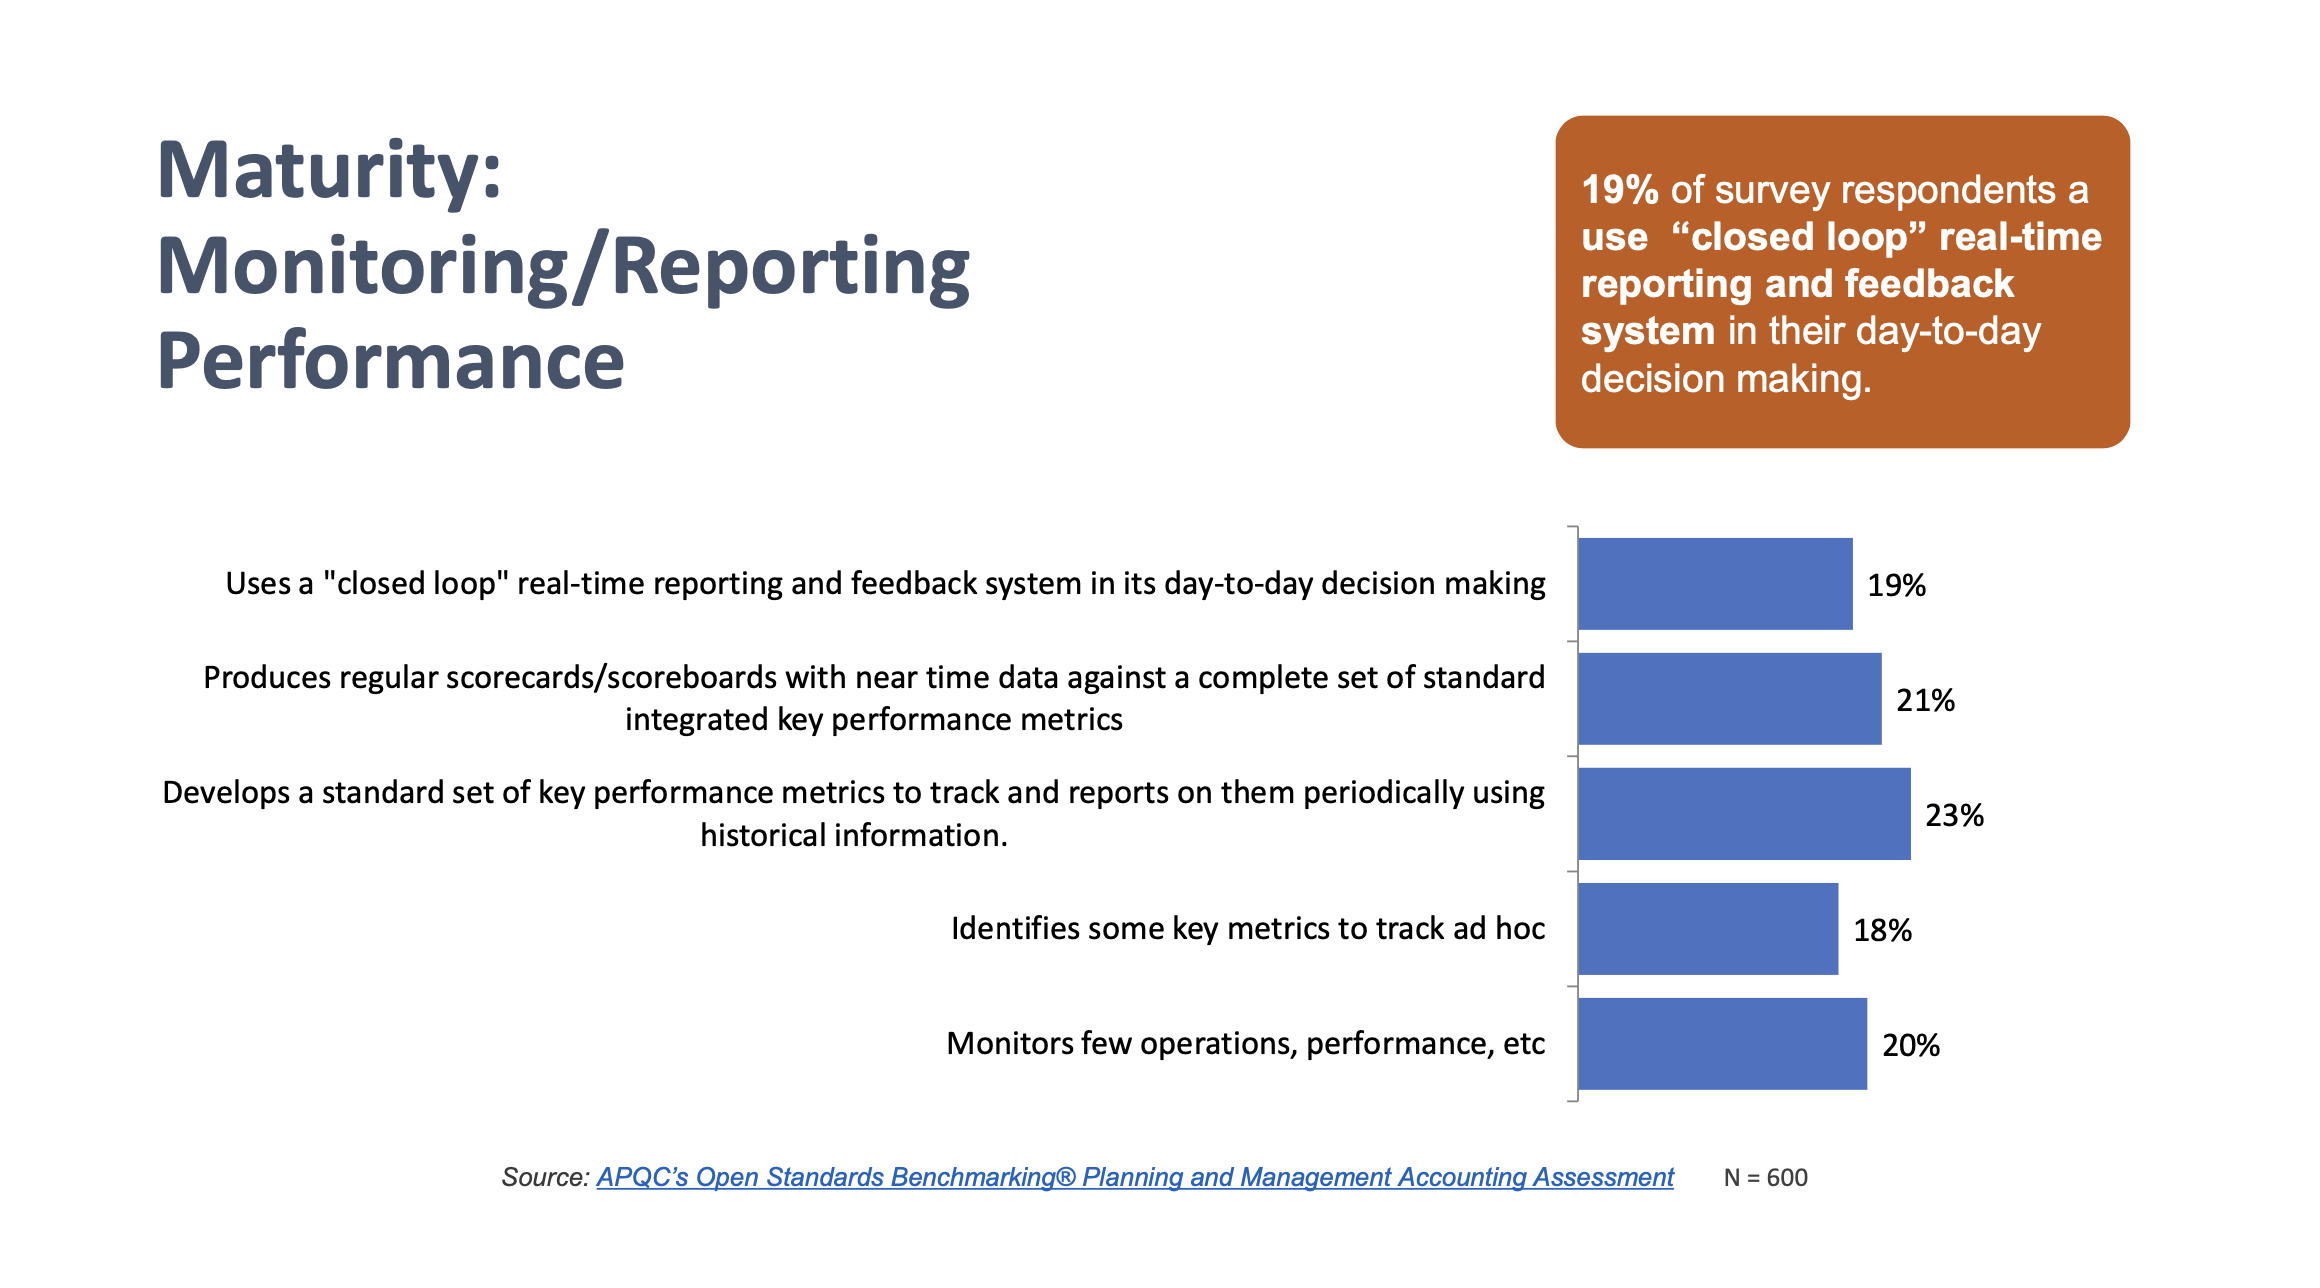 Maturity: monitoring/reporting performance